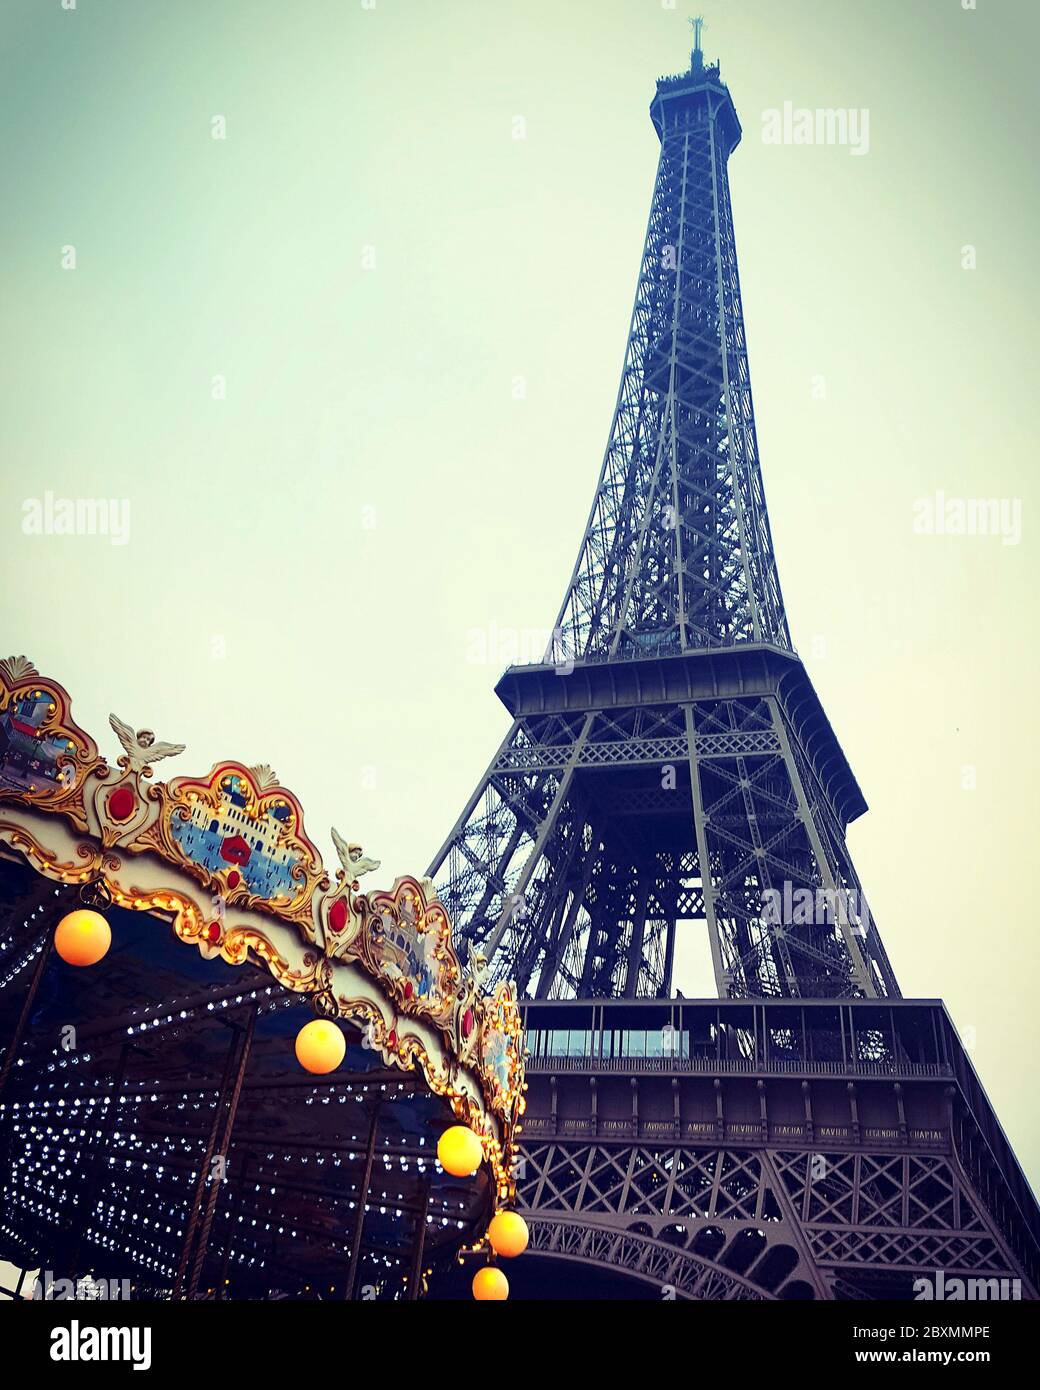 Altmodisches Karussell im Park in der Nähe des Eiffelturms. Paris. Ile de France. Frankreich. Stockfoto